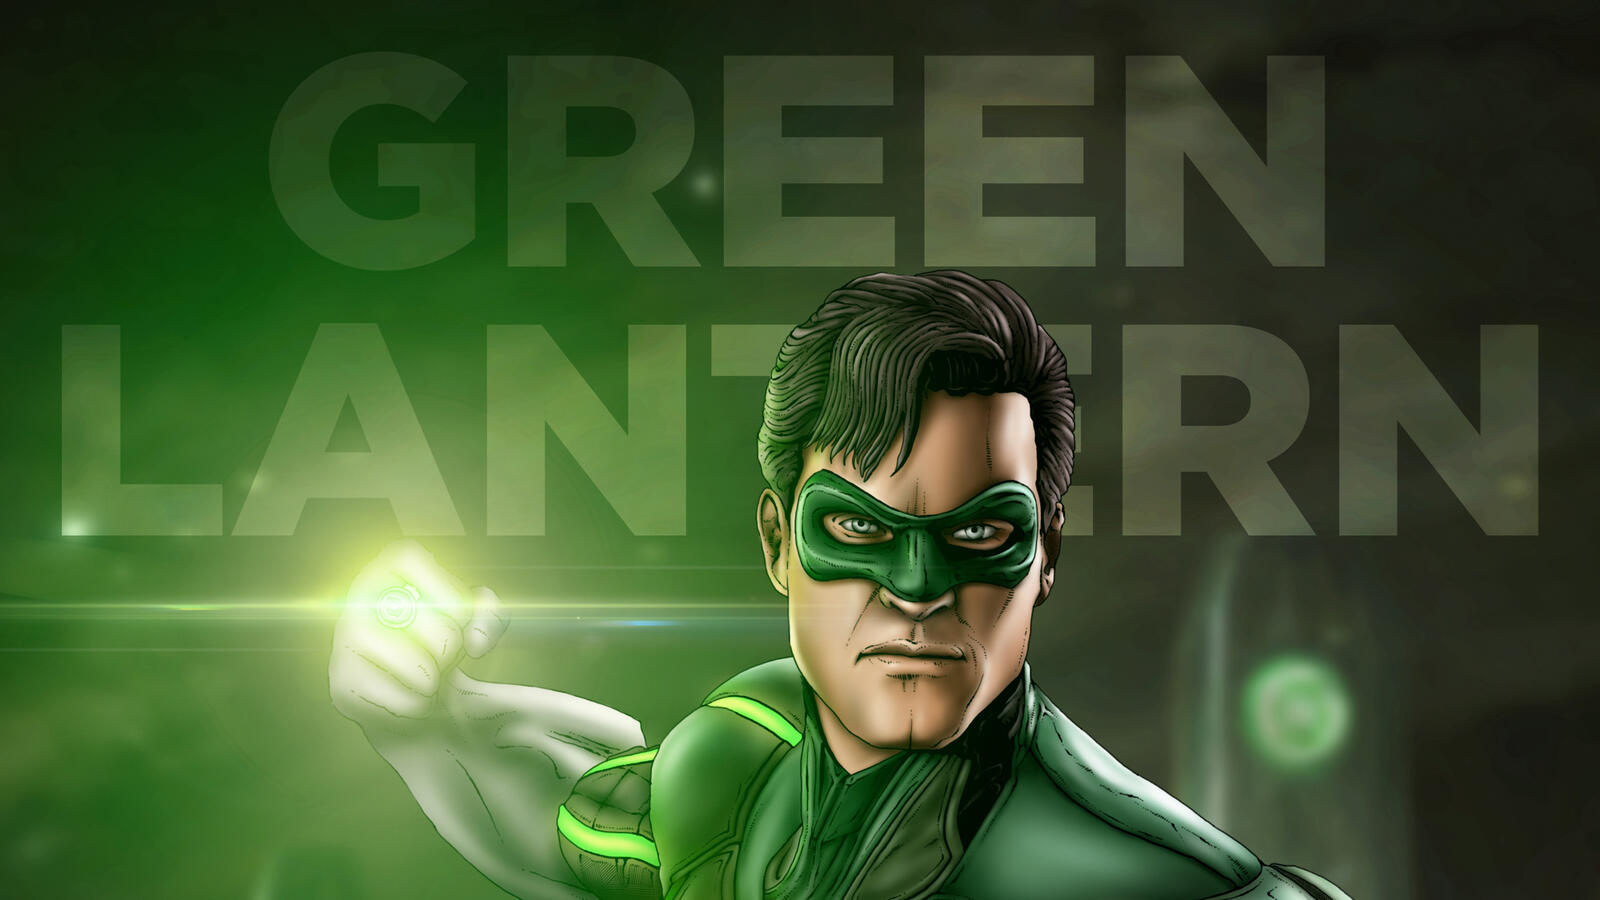 Wallpapers green lantern superheroes artist on the desktop